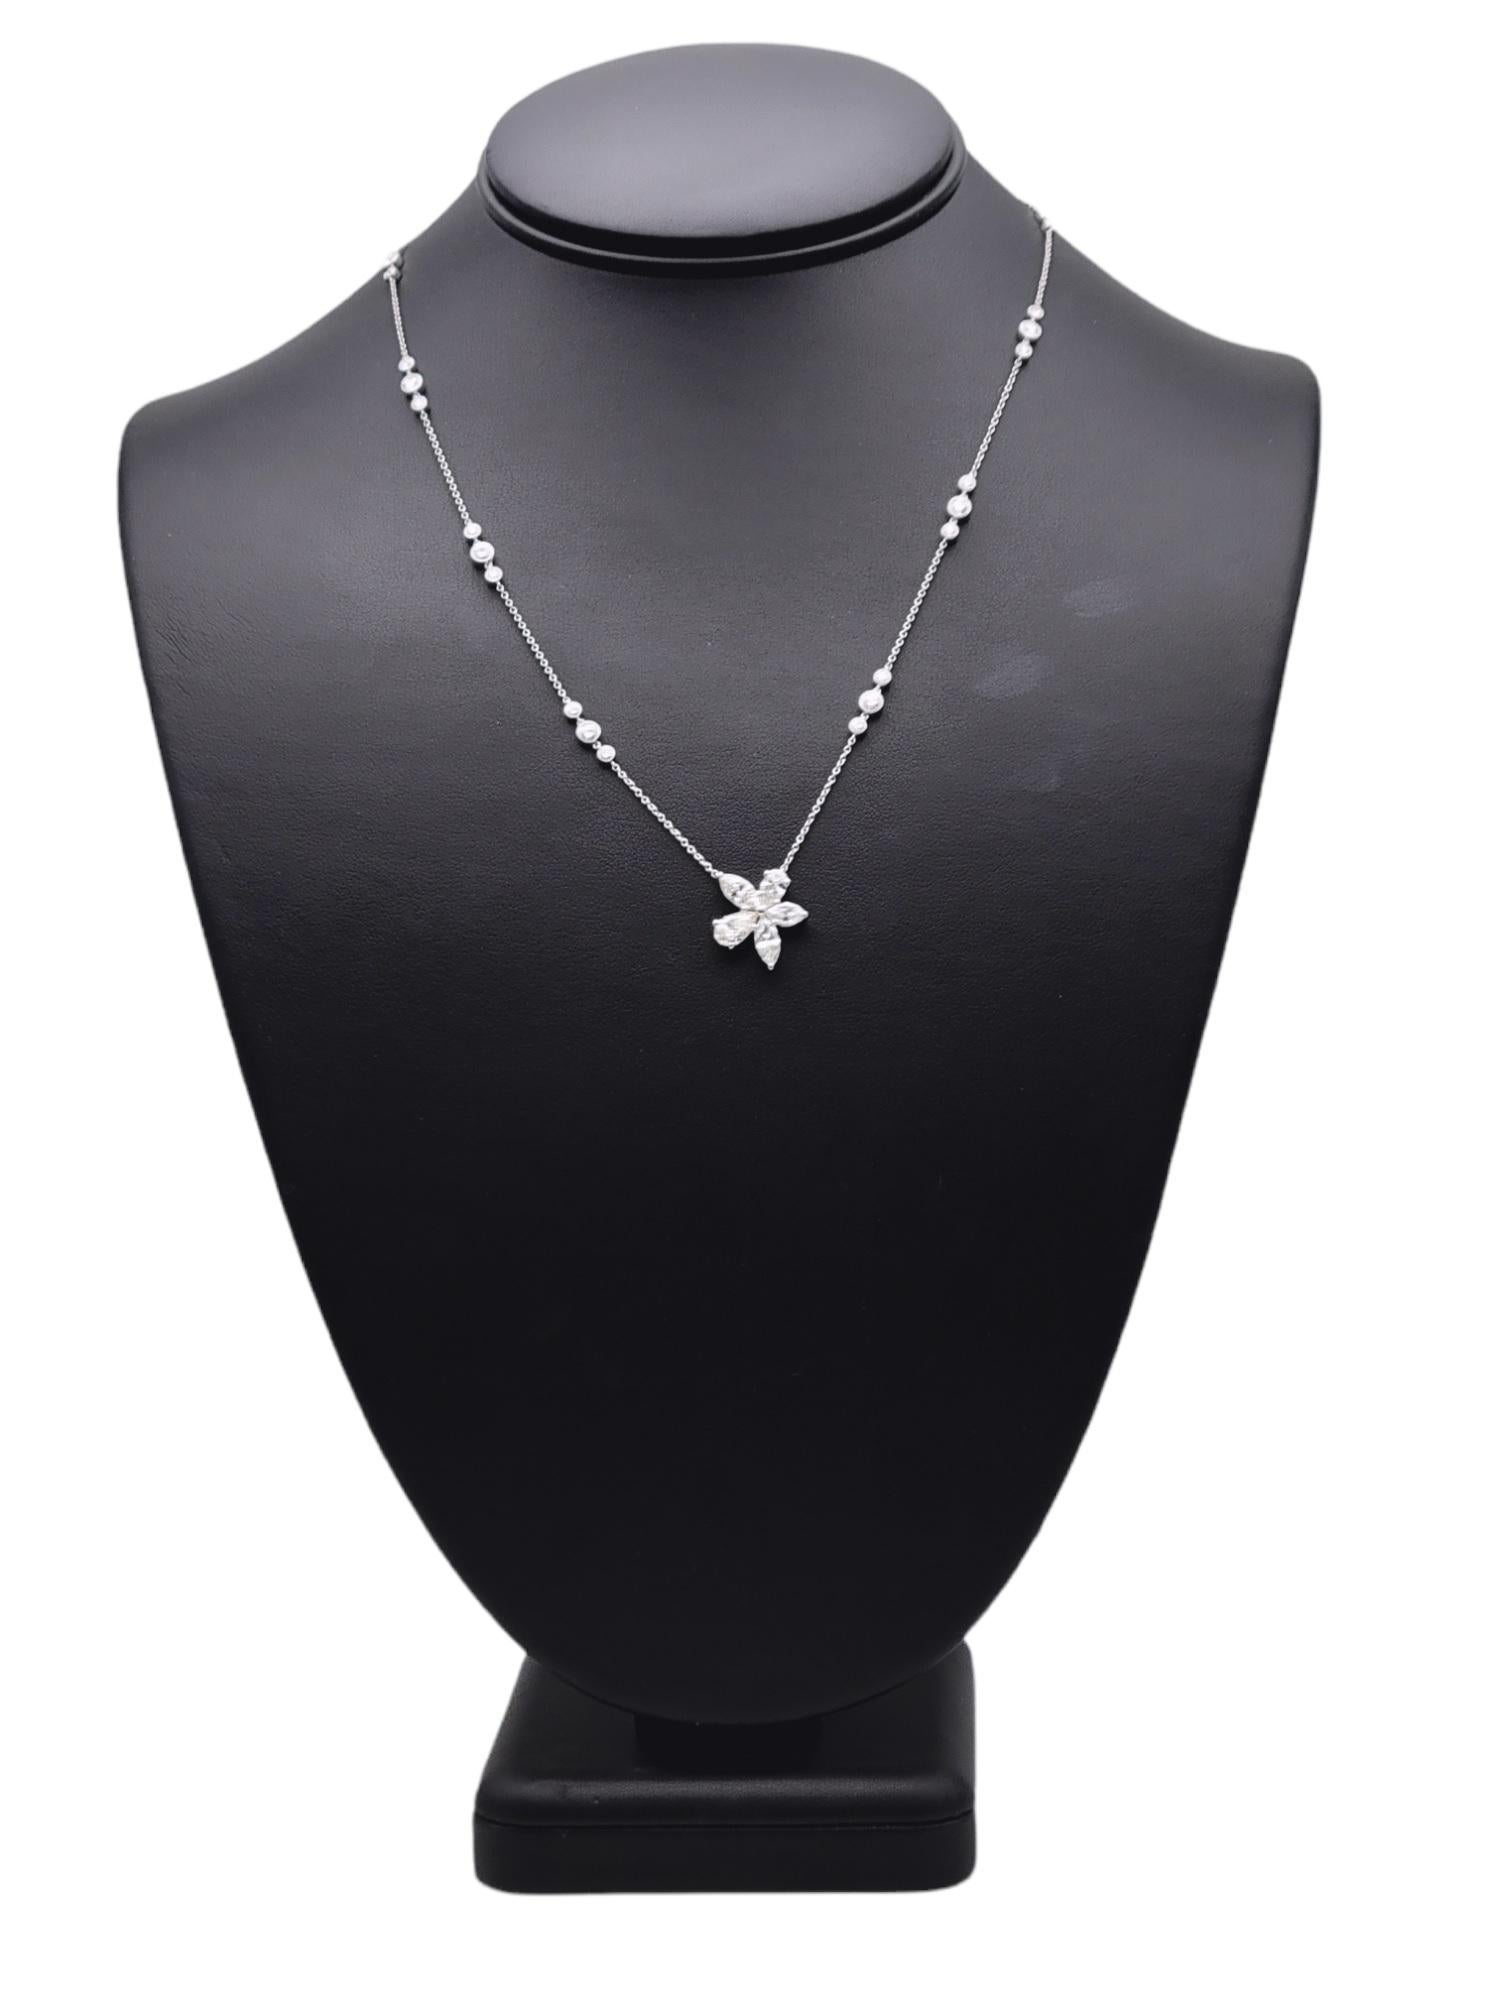 Tiffany & Co. Victoria Diamond Pendant Necklace in Platinum Extra Large, Station 9